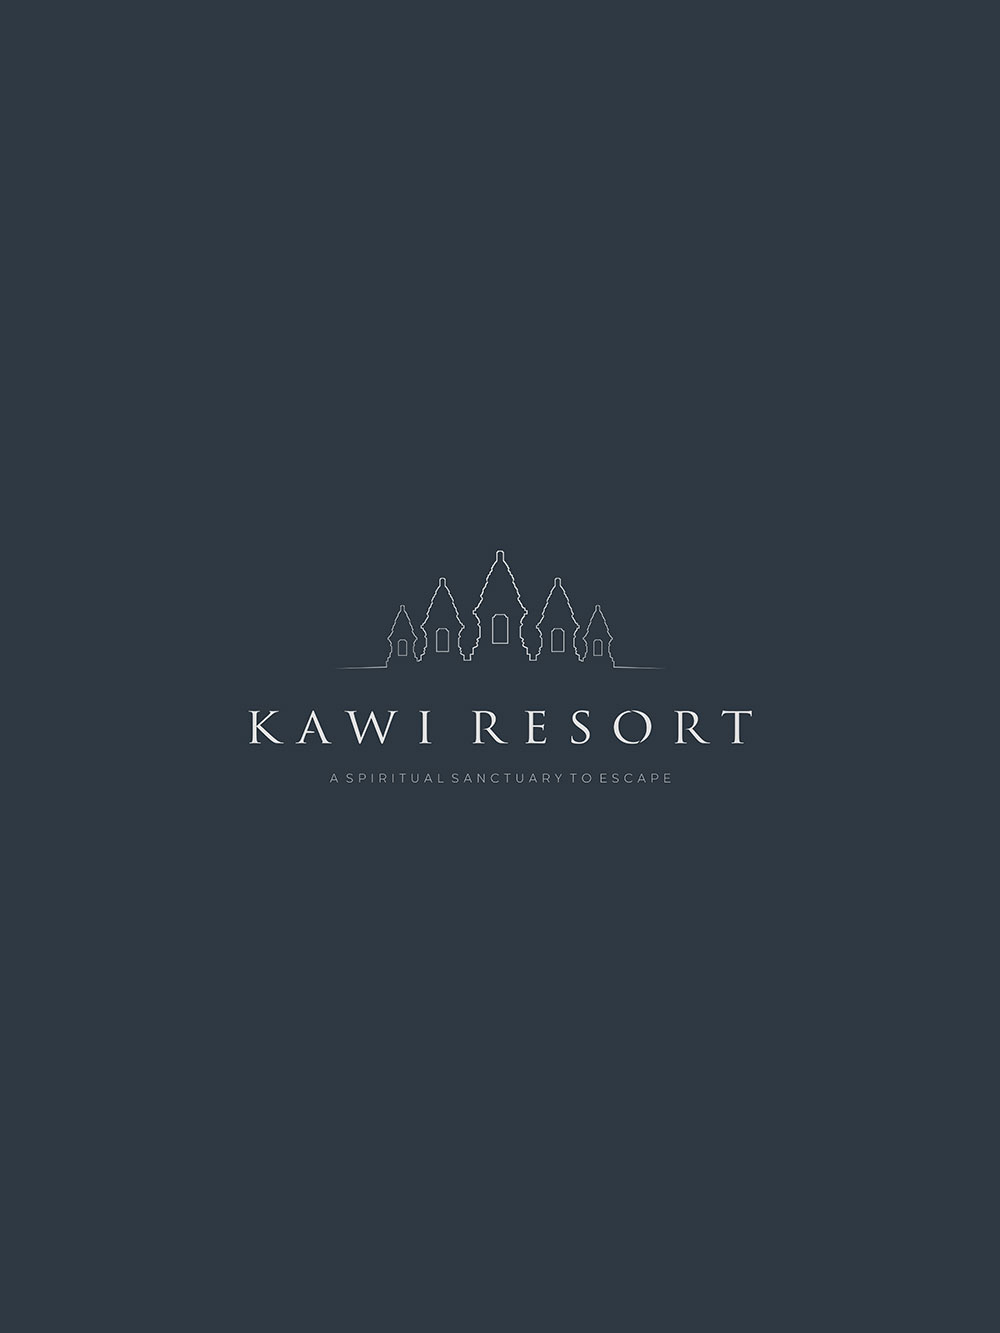 Kawi Resort Project